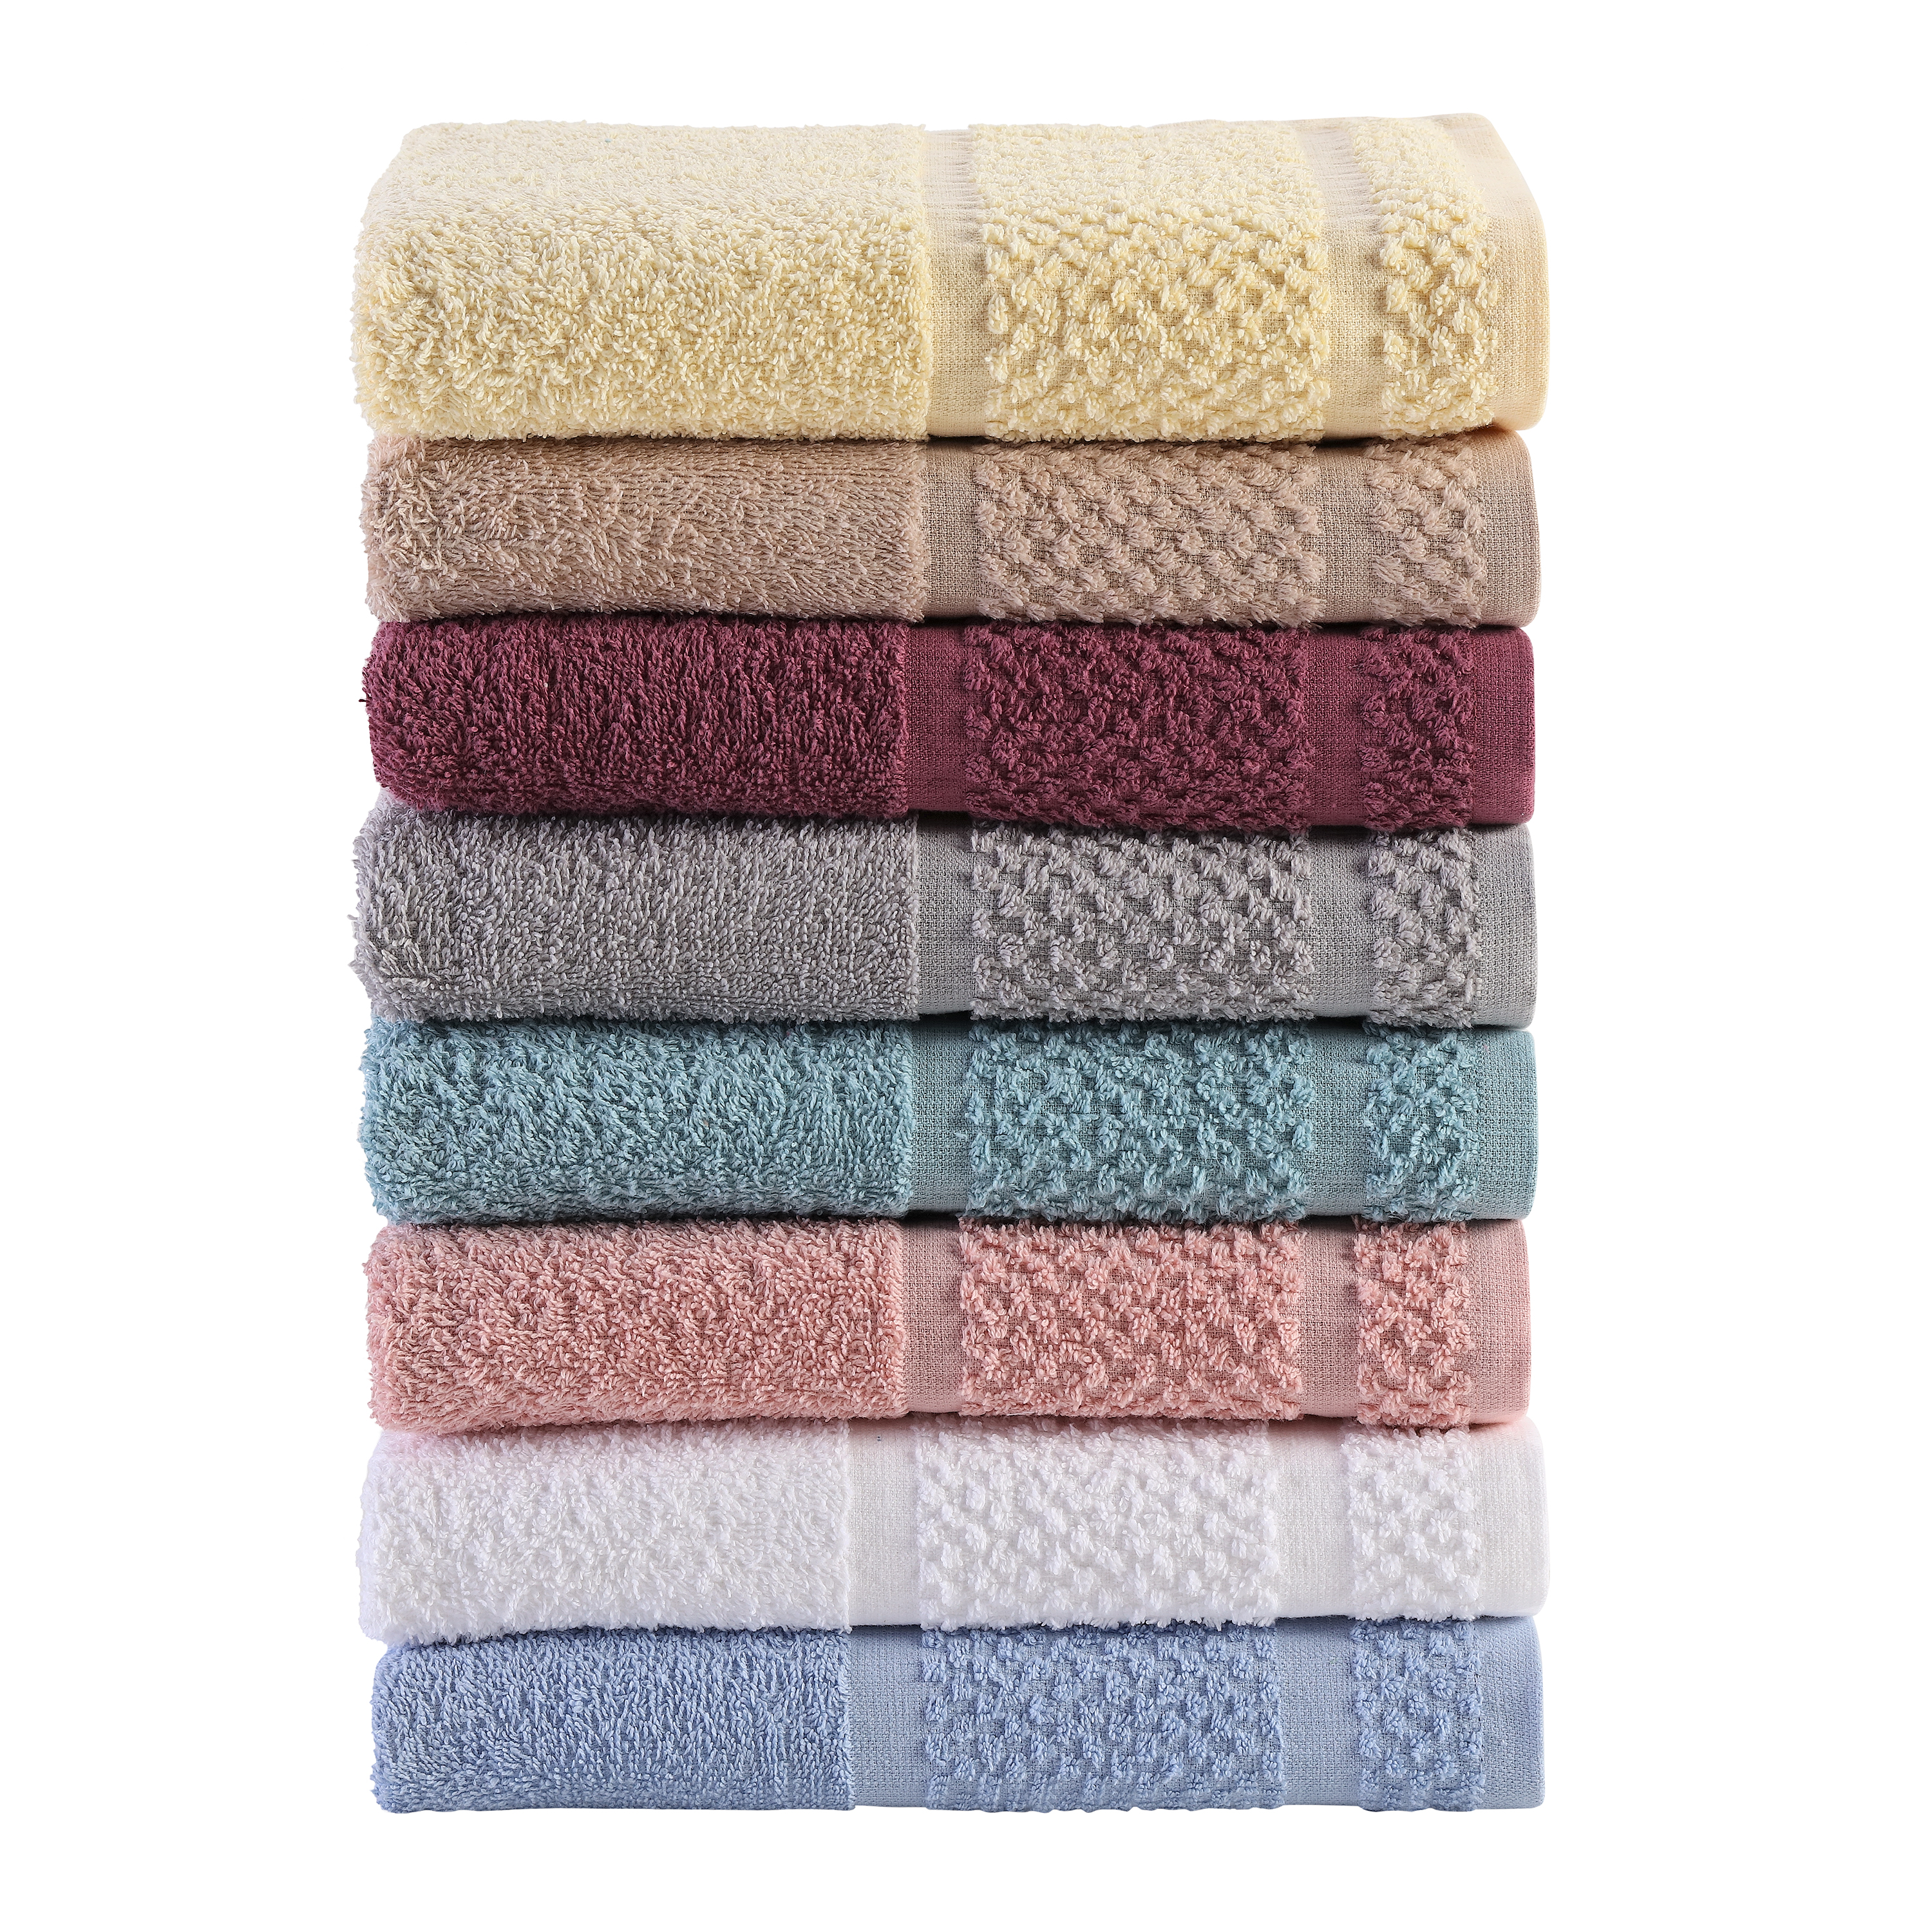 Mainstays 10 Piece Bath Towel Set with Upgraded Softness & Durability, Gray - image 5 of 7